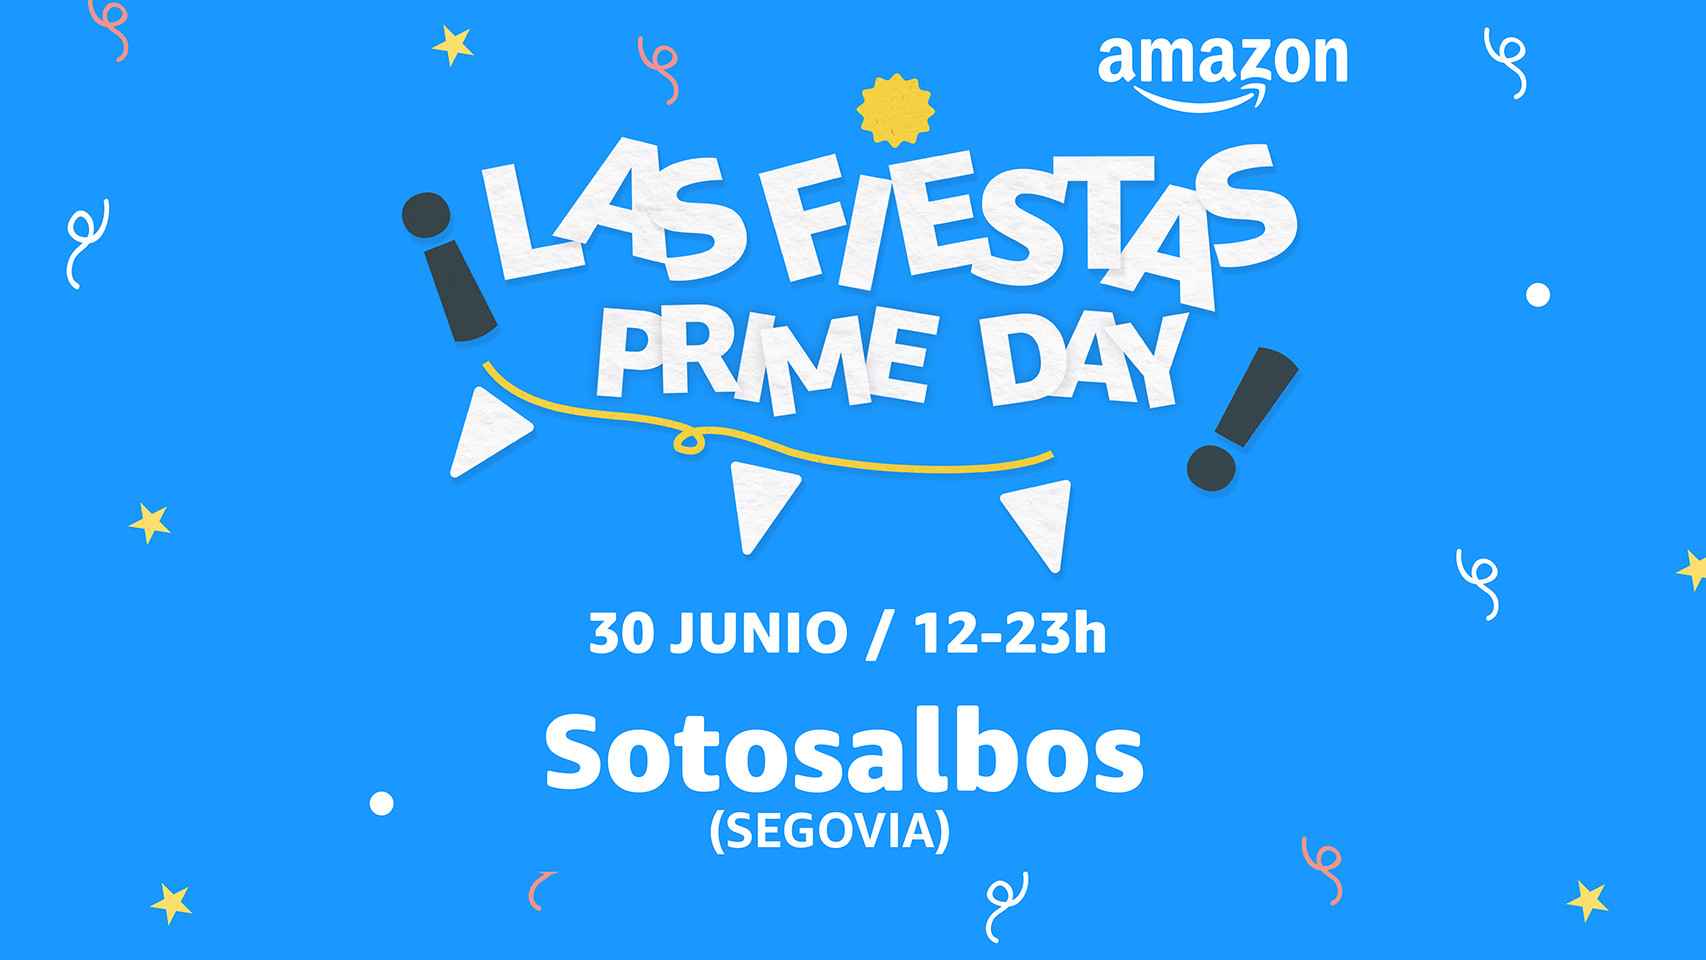 Las Fiestas Prime Day